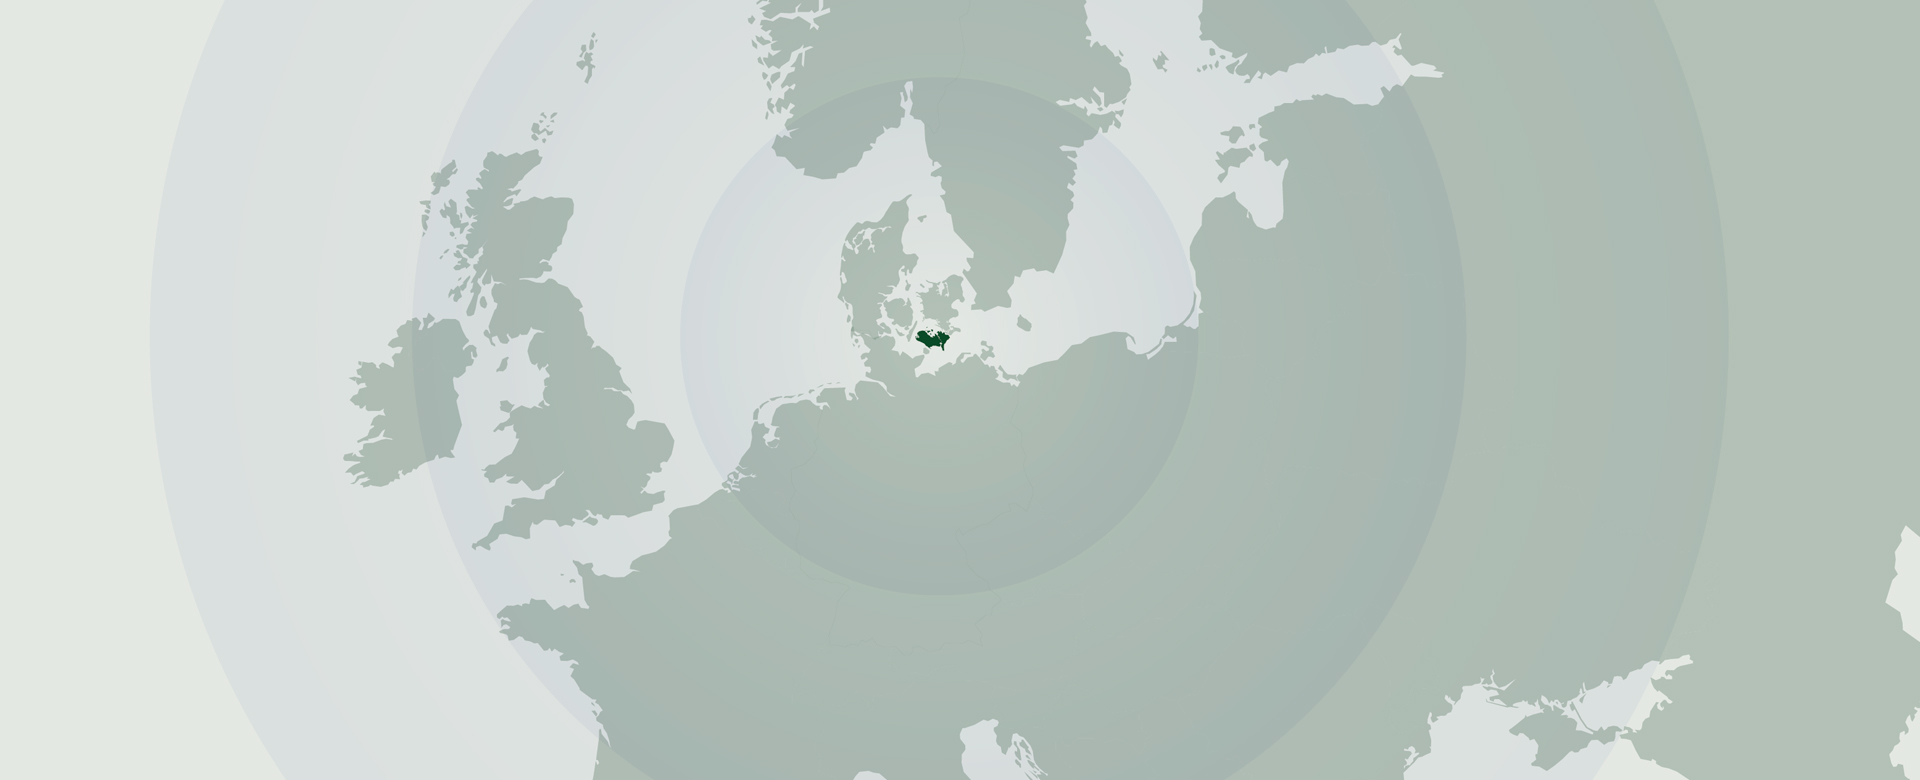 Kort over Lolland-Falster og Europa